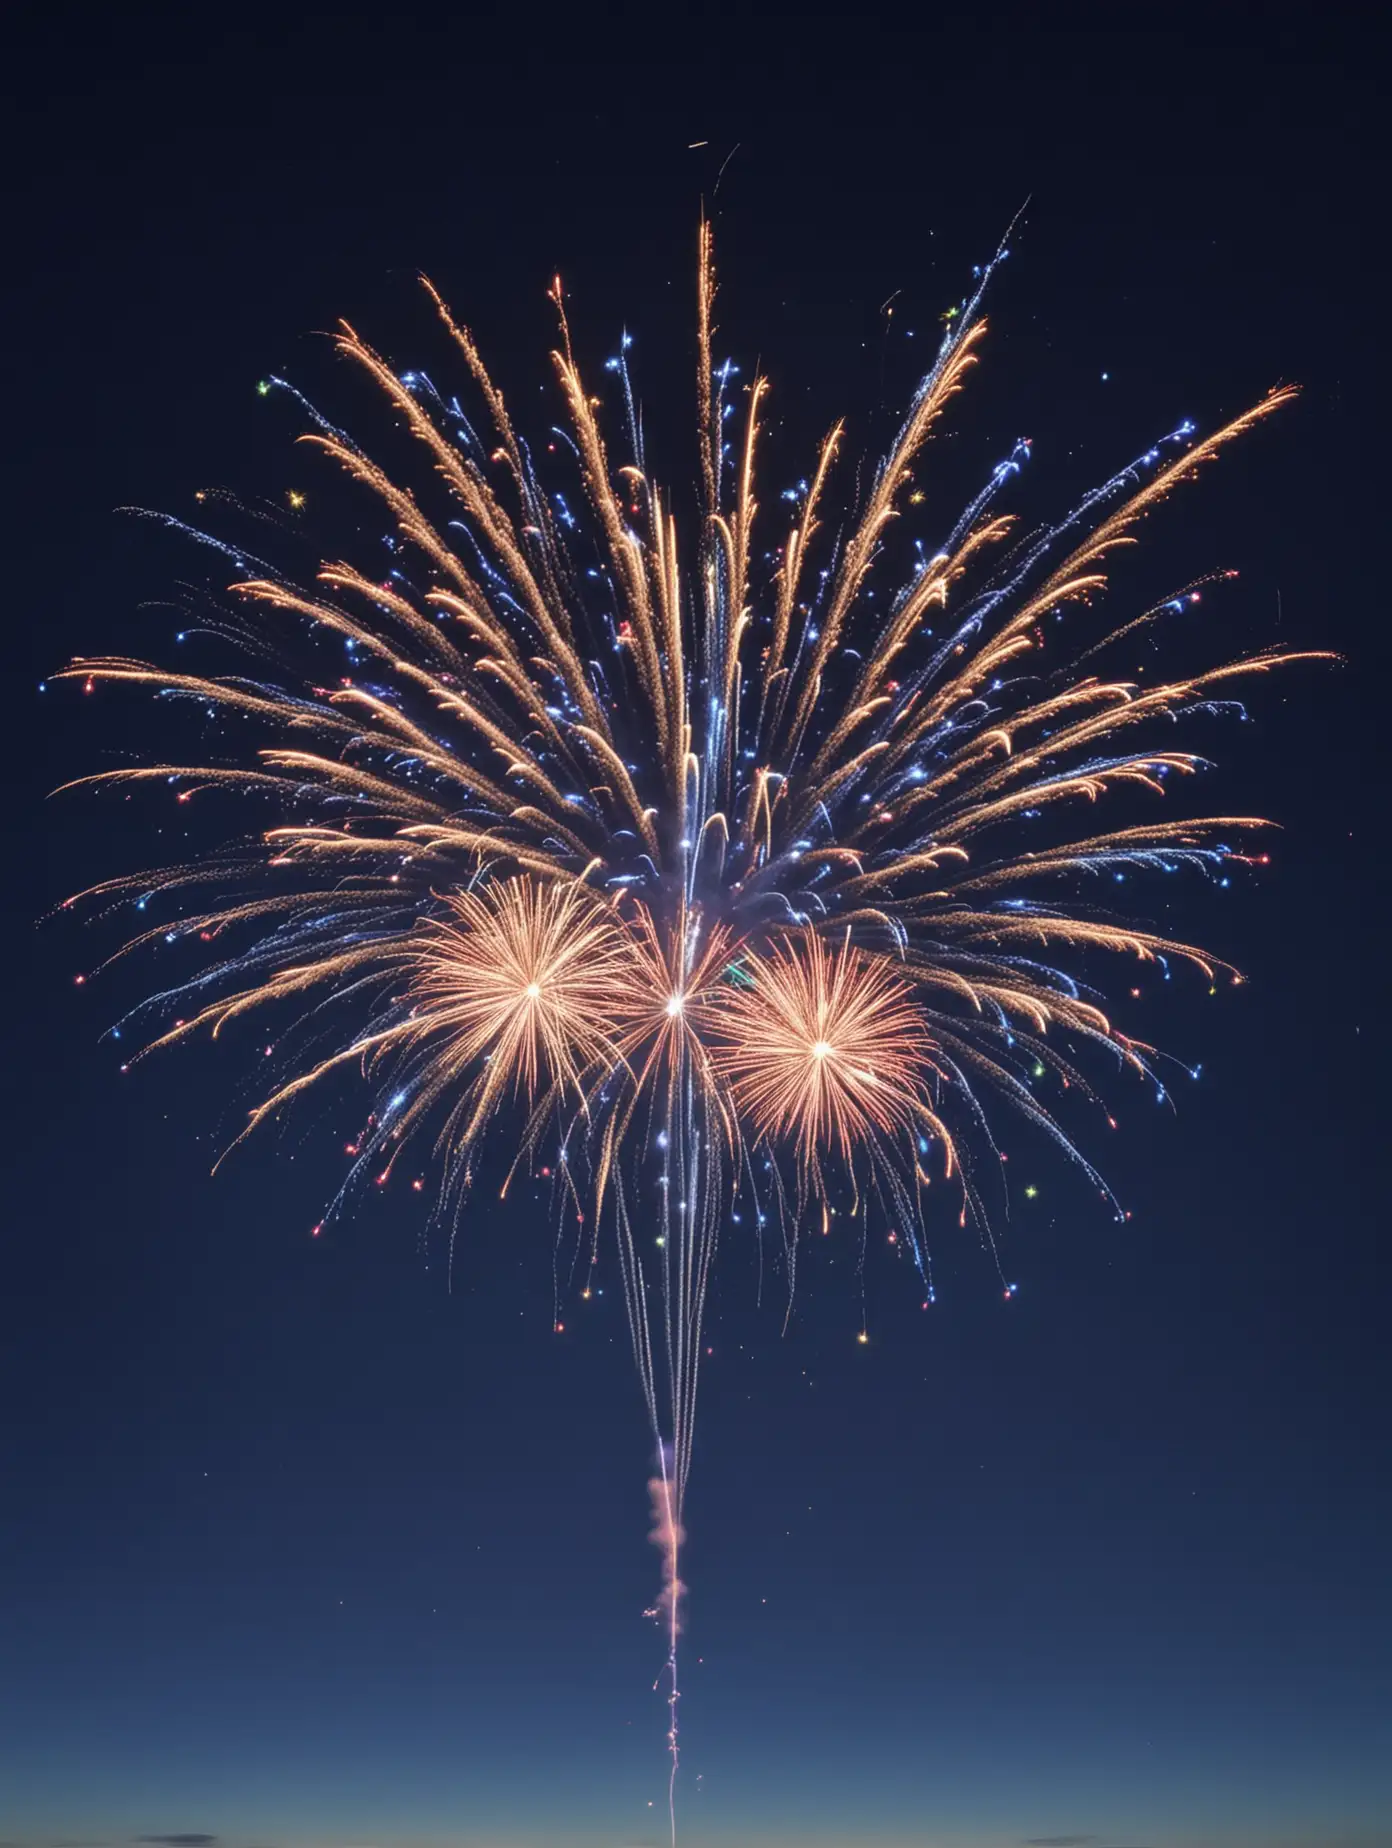 Vibrant Array of Tiny Glowing Fireworks Illuminate the Dark Blue Sky